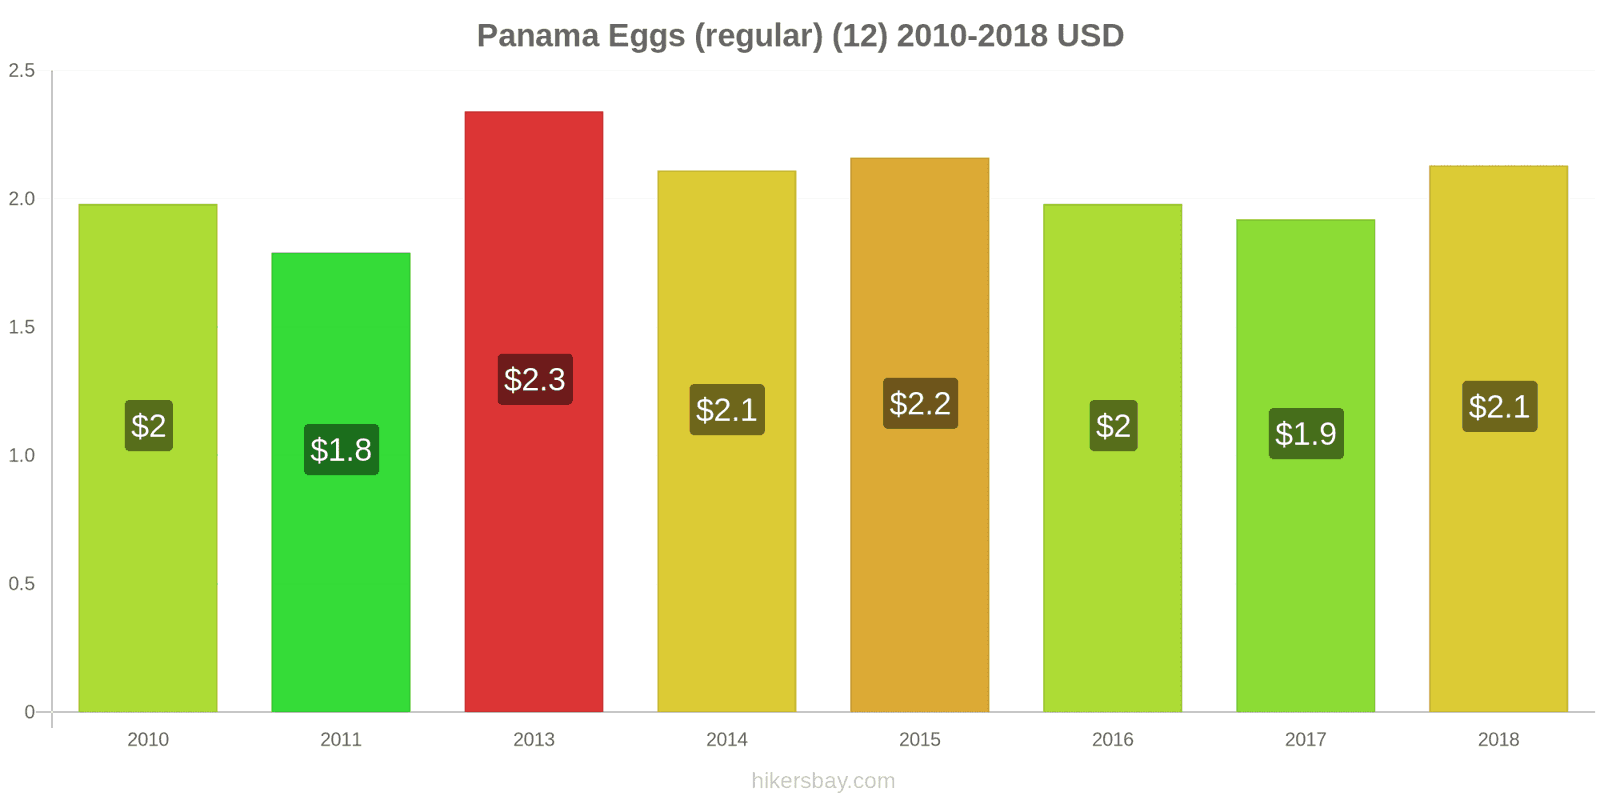 Panama price changes Eggs (regular) (12) hikersbay.com